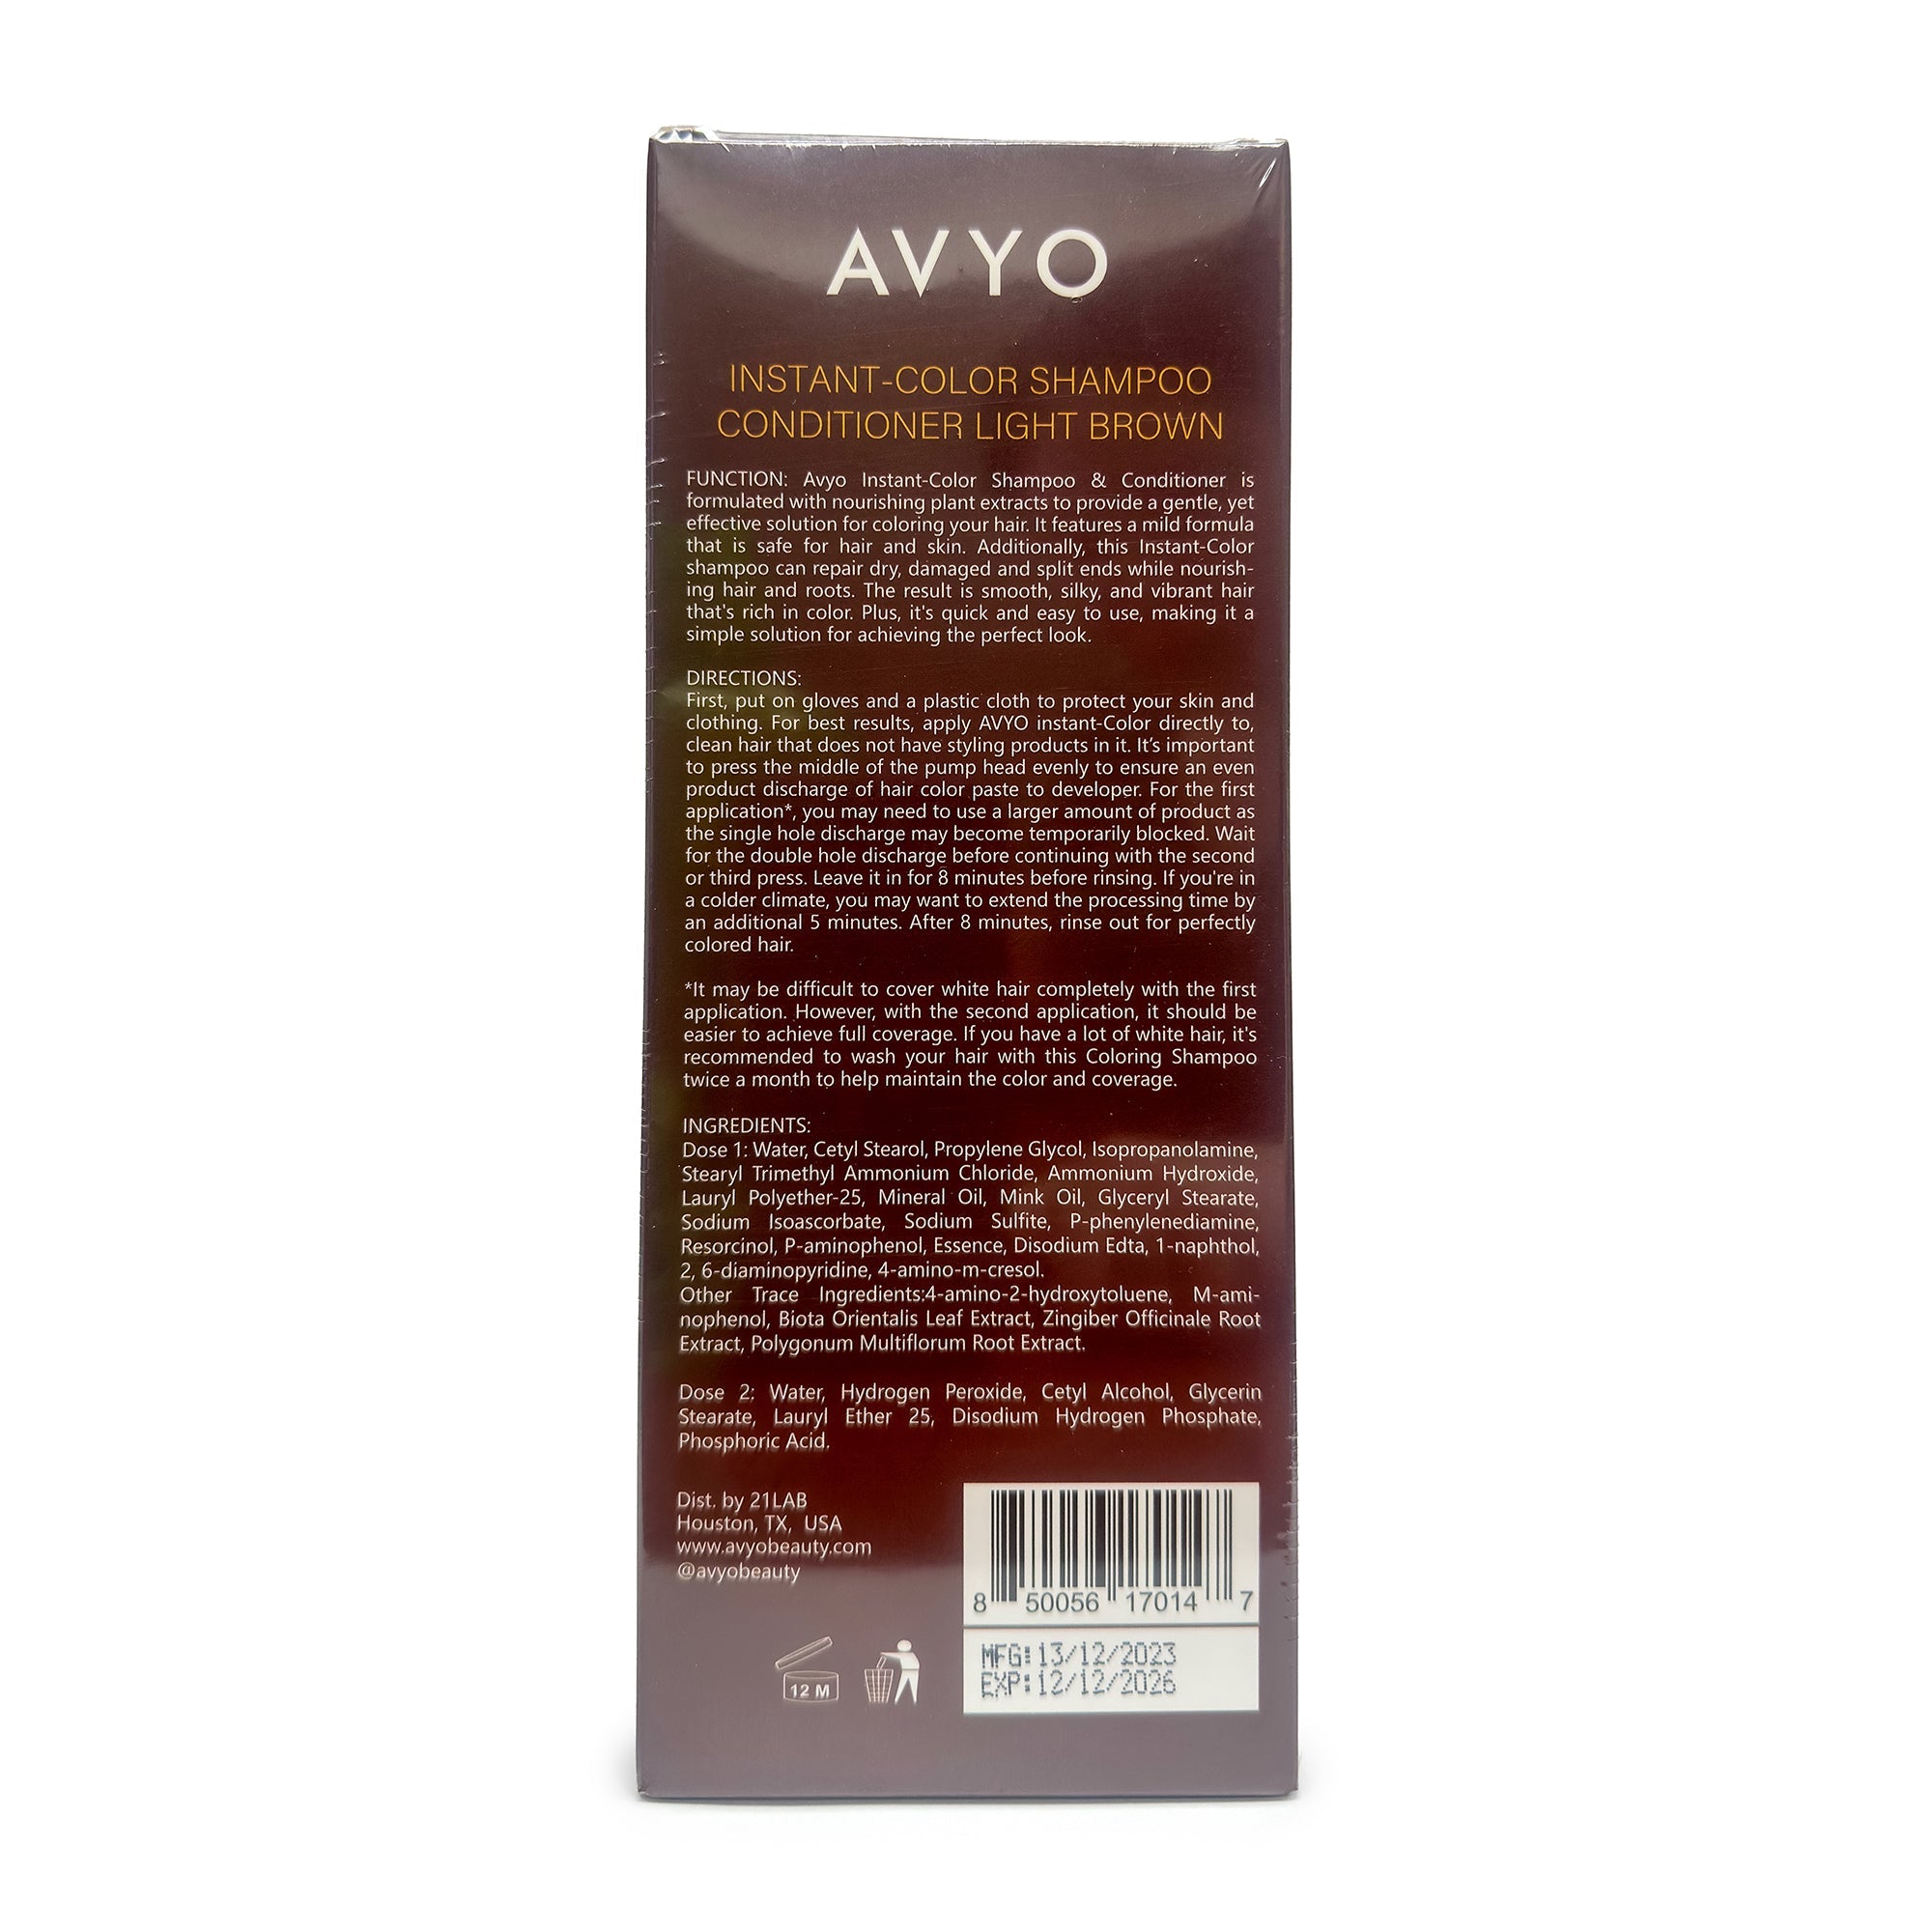 Light Brown | Instant-Color Shampoo Conditioner | 5 in 1 | 500 mL - 16.91 fl.oz. | AVYO - SH Salons